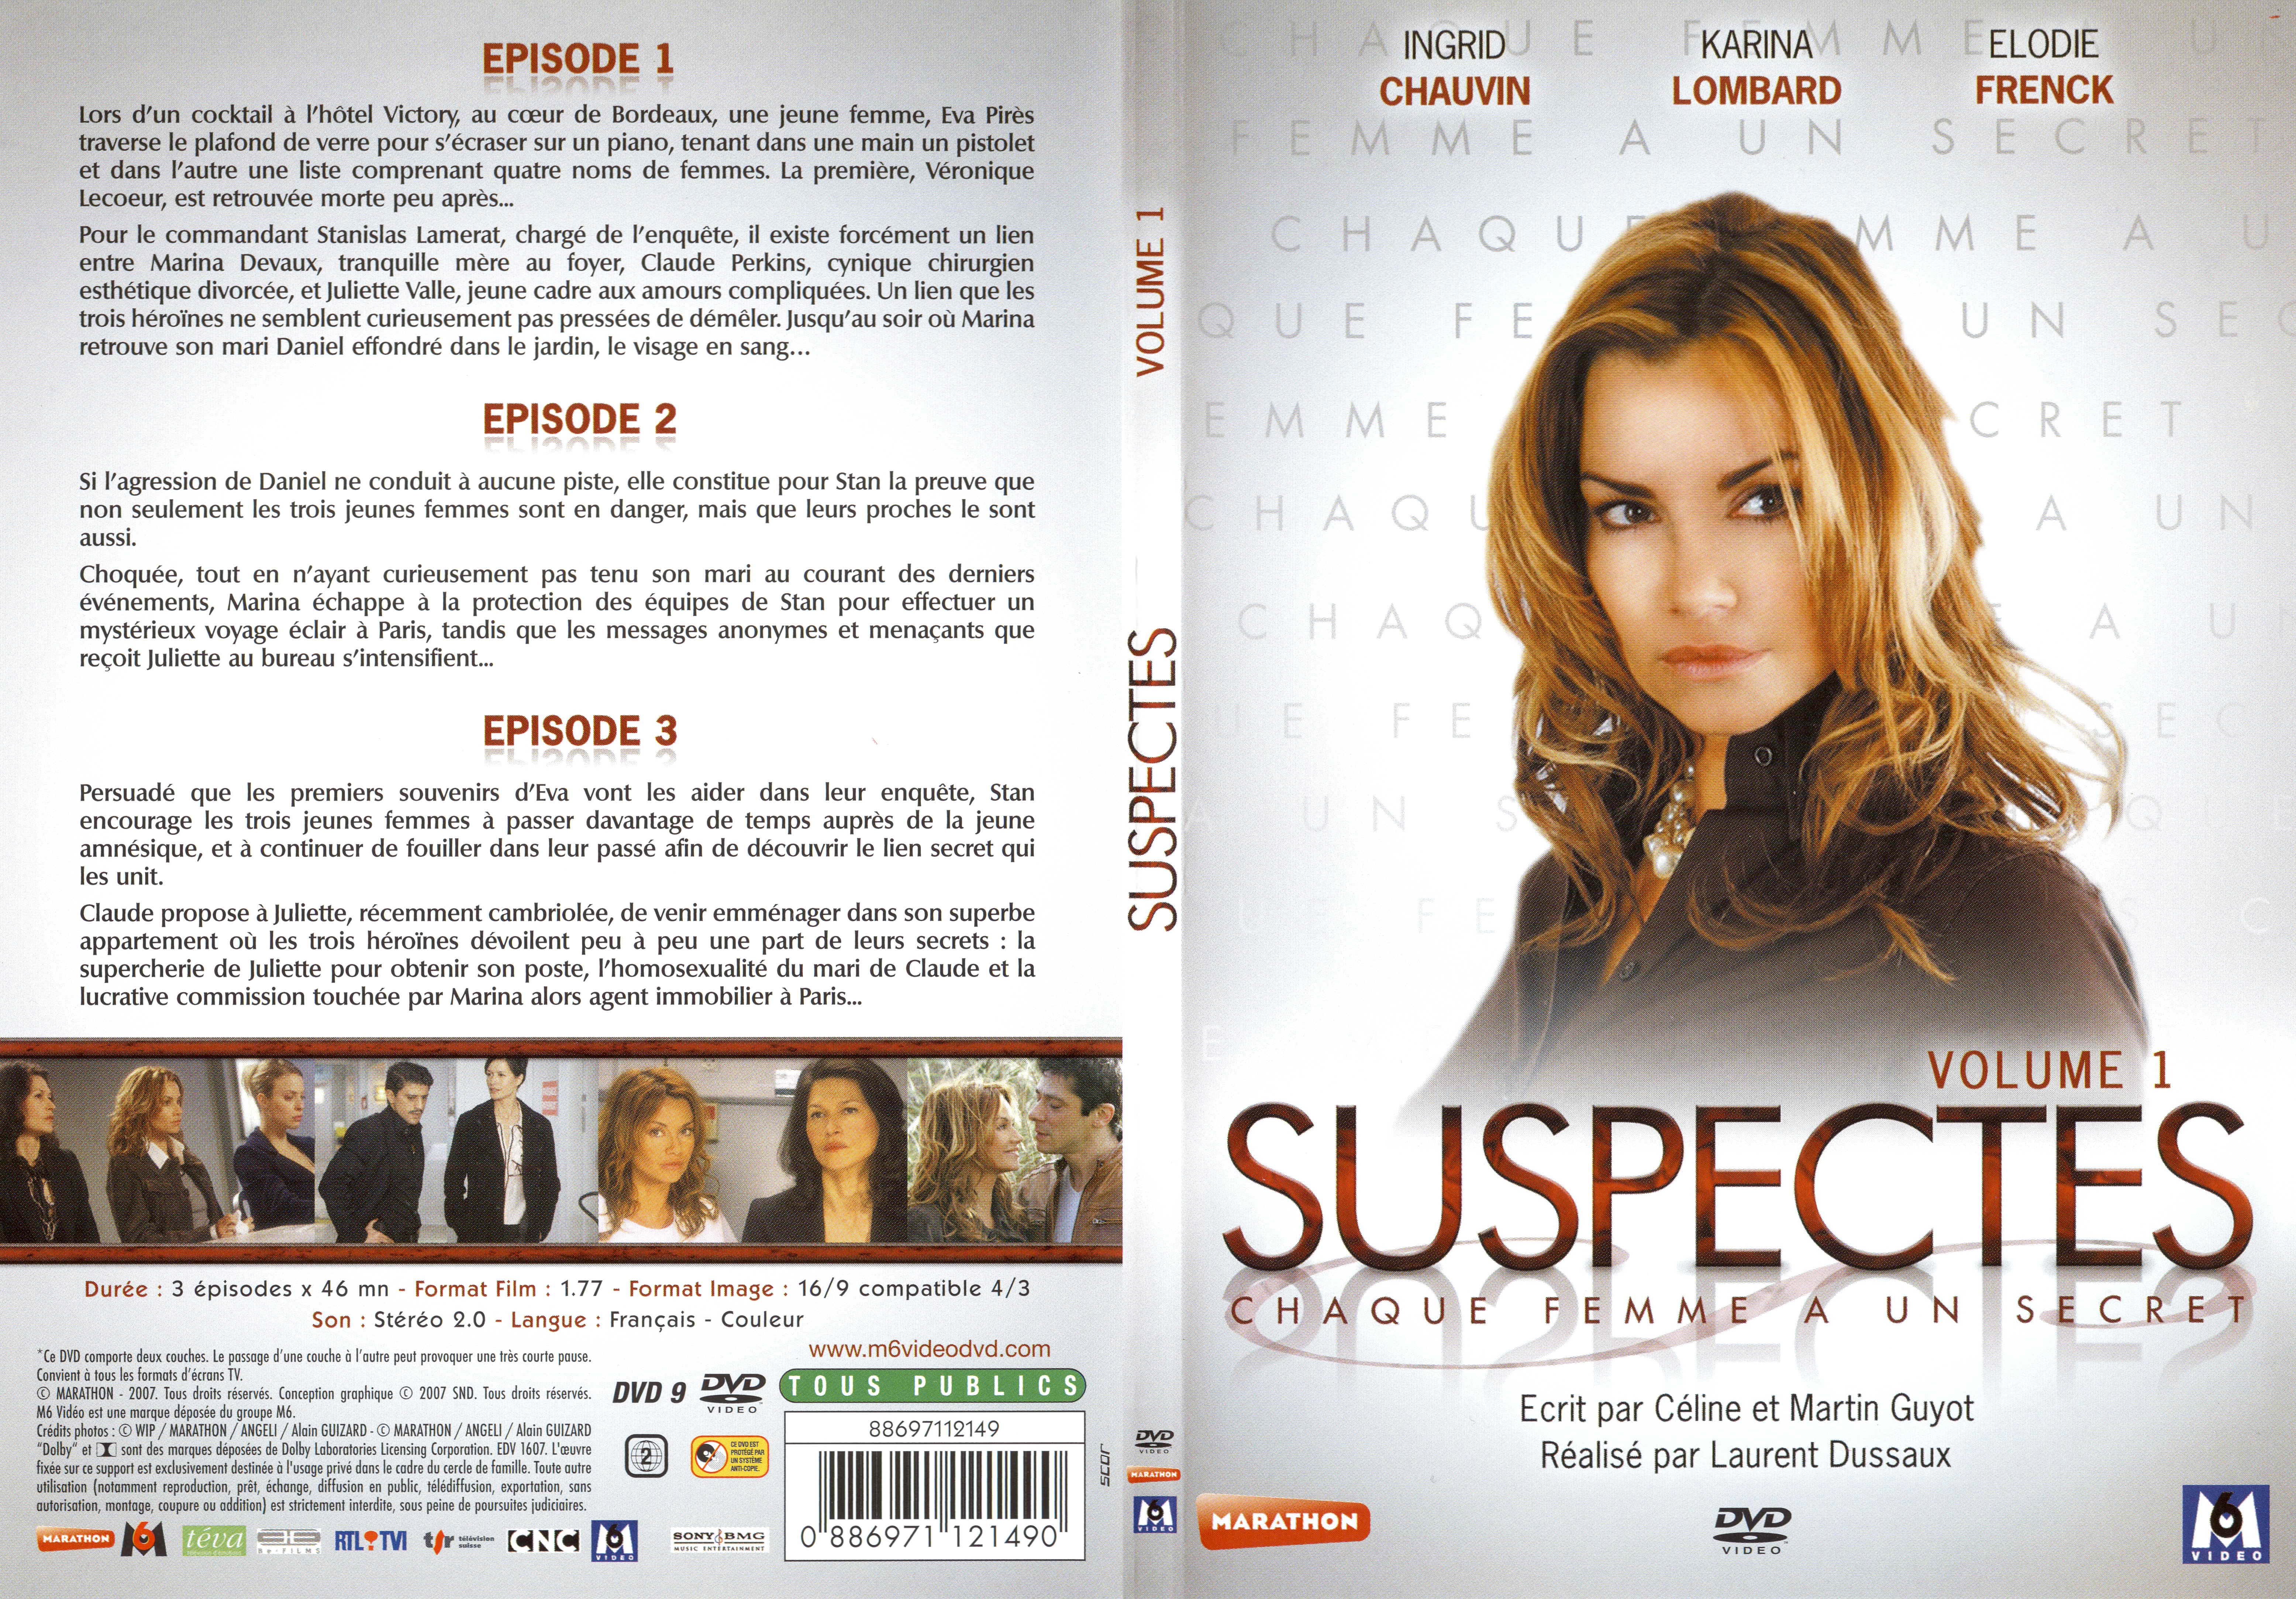 Jaquette DVD Suspectes vol 1